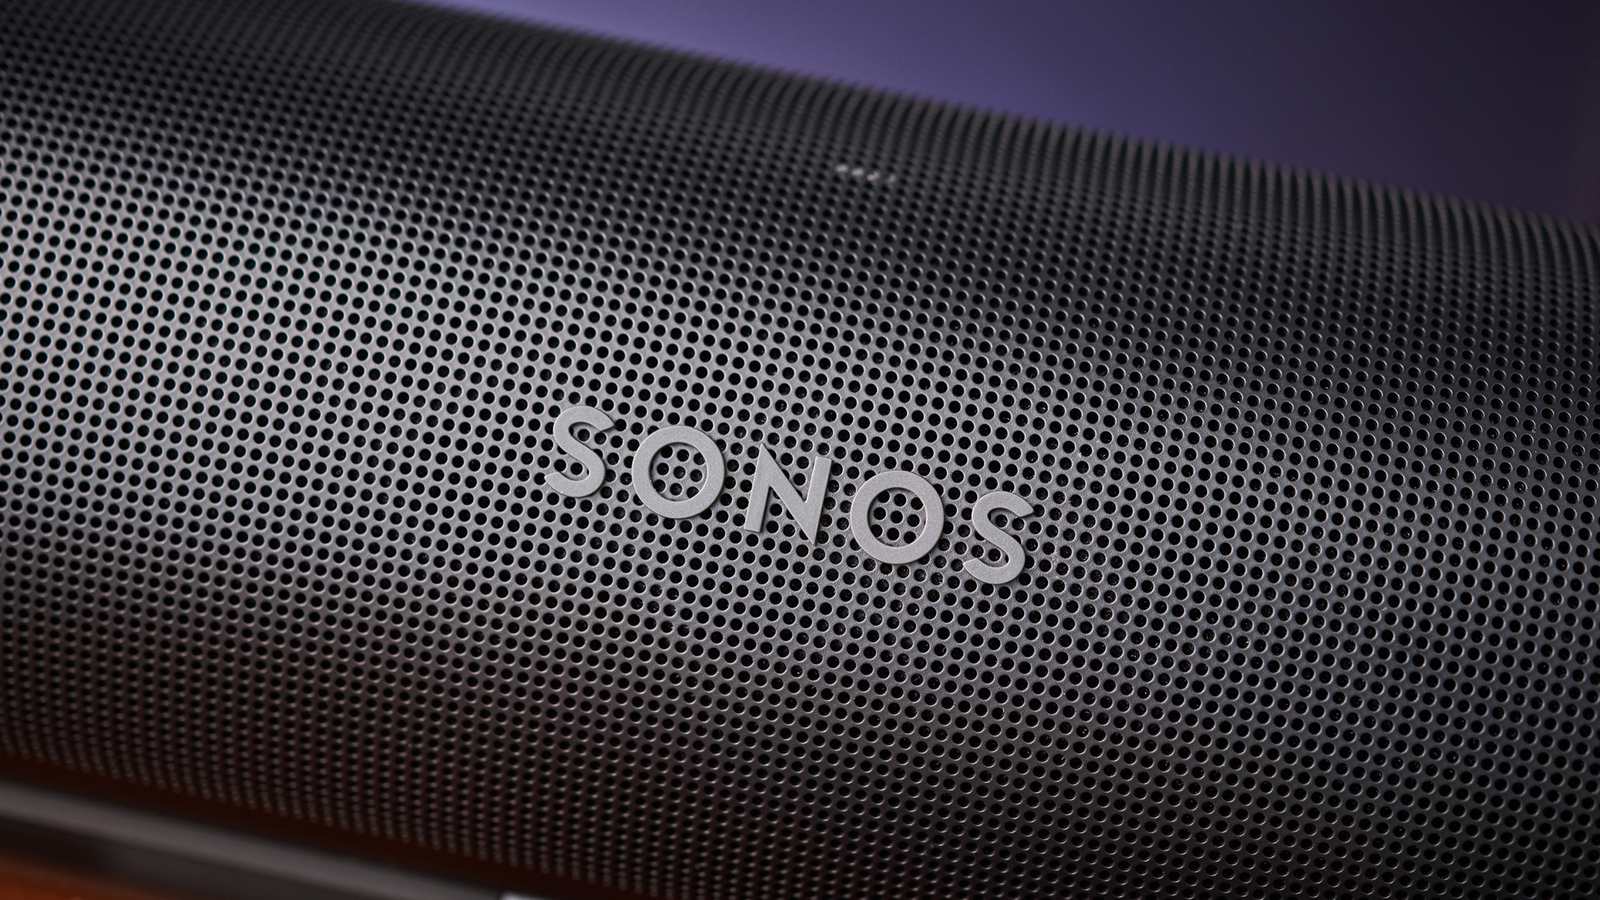 Sonos speakers finally get Audio streaming |